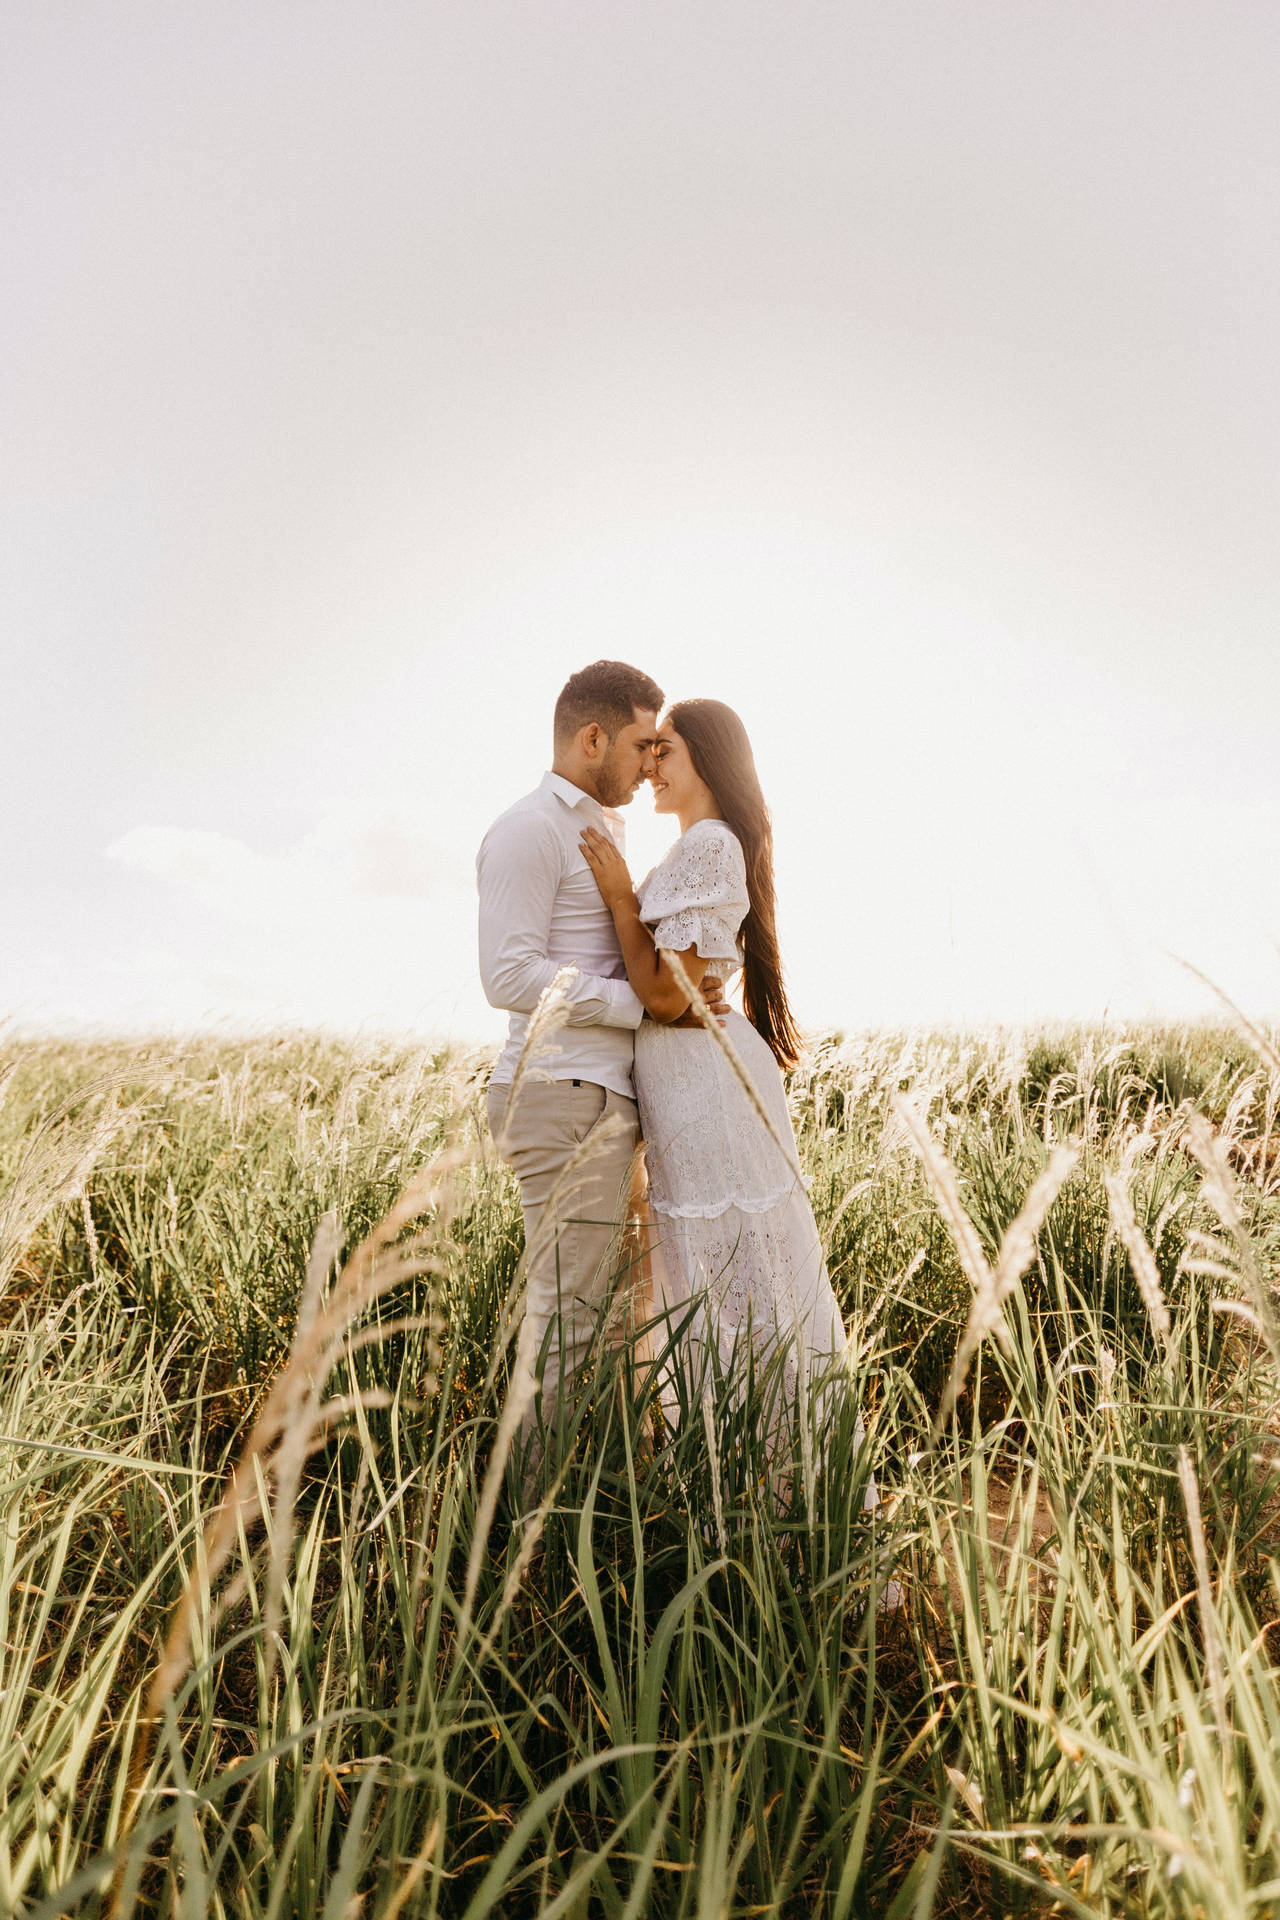 Romantic Couple On Grass Field